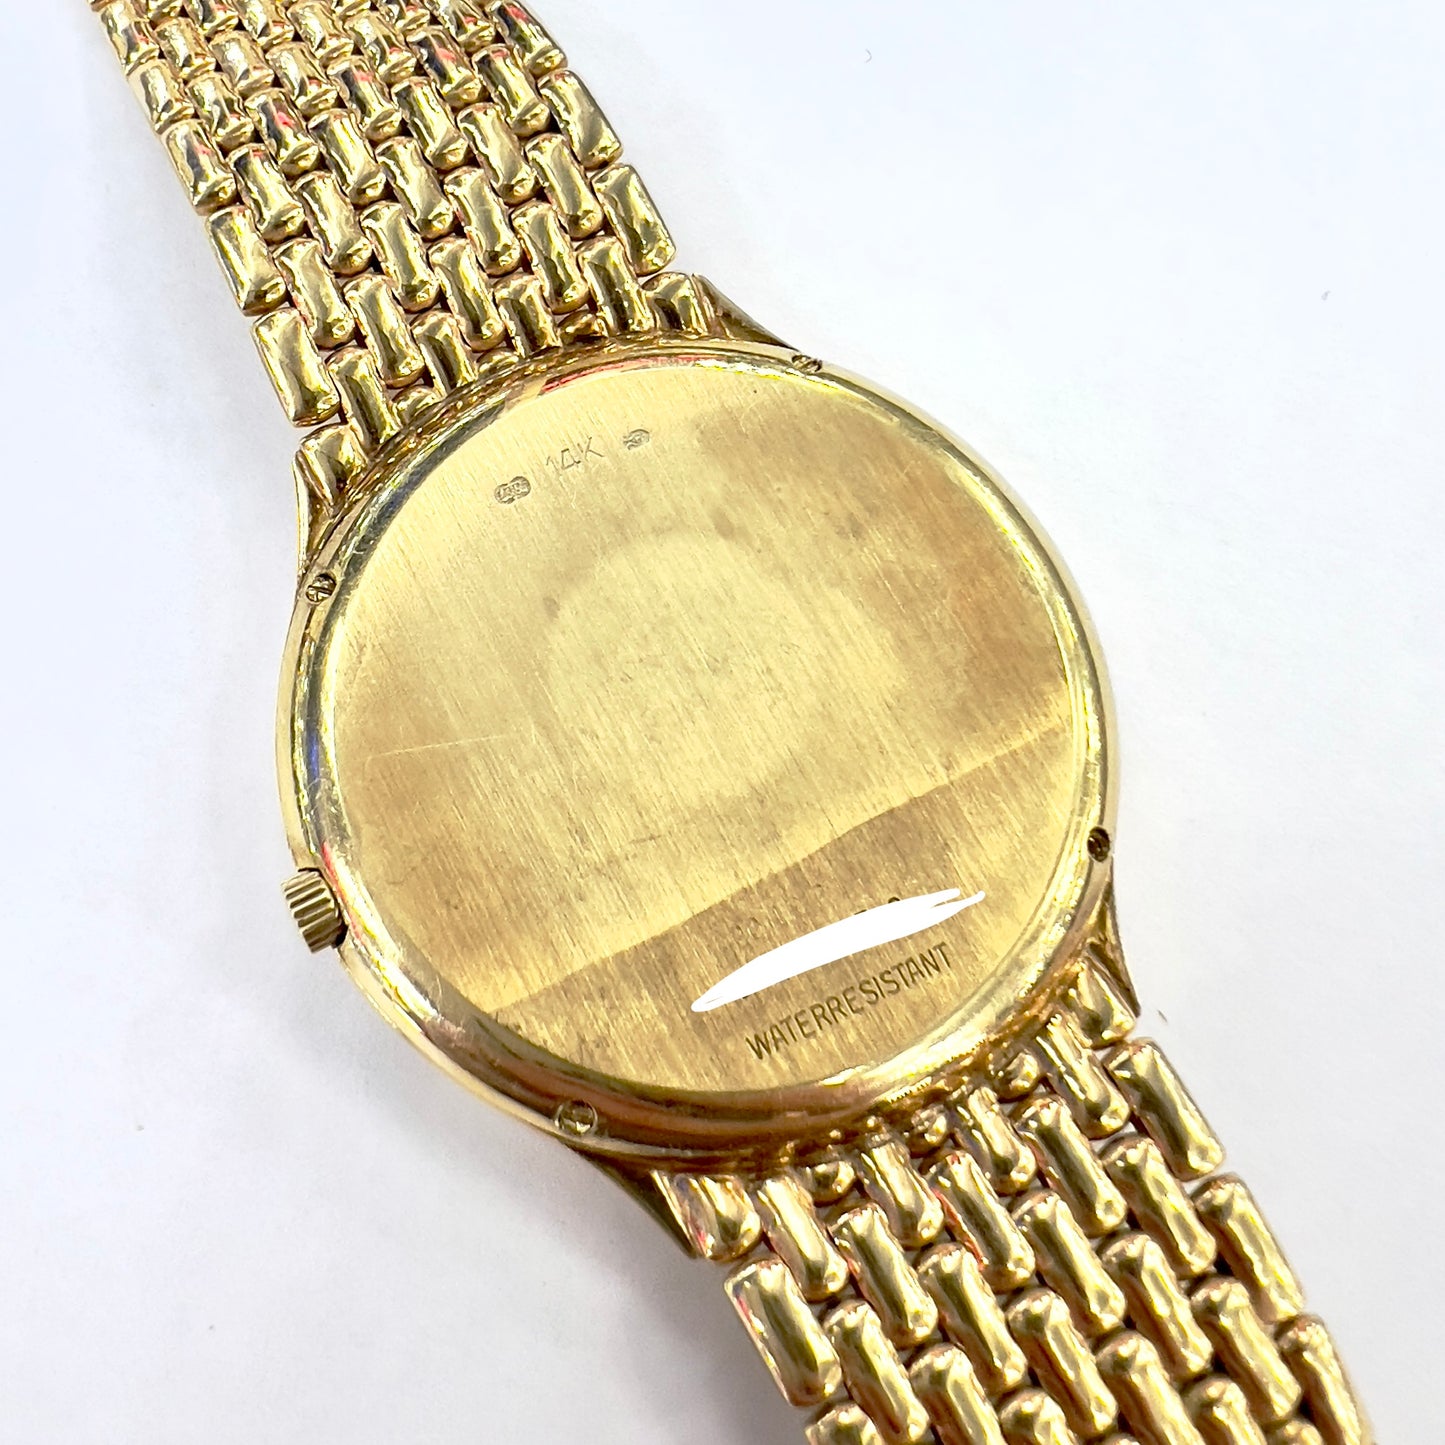 CONCORD Quartz 34mm 14K Yellow Gold Moon Phase Watch